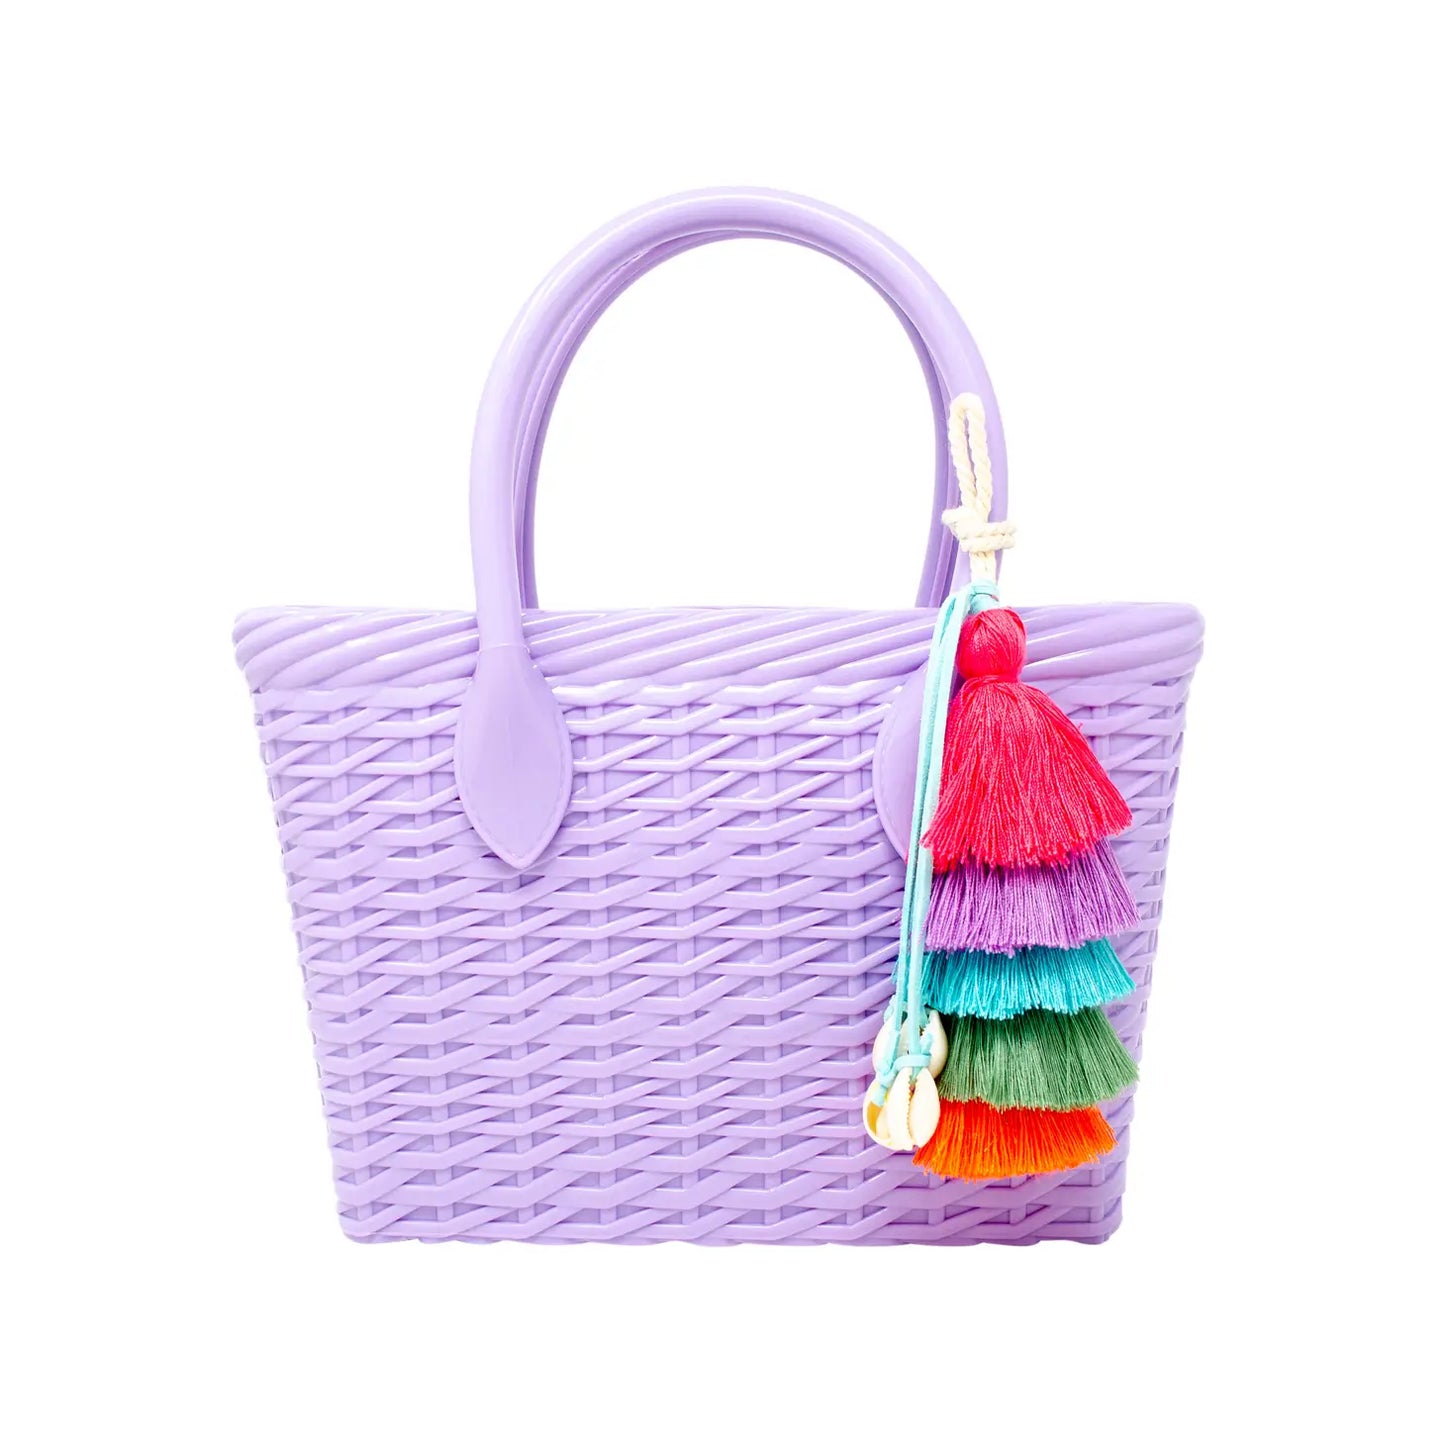 Jelly Basketweave Tote Bag - Lavender